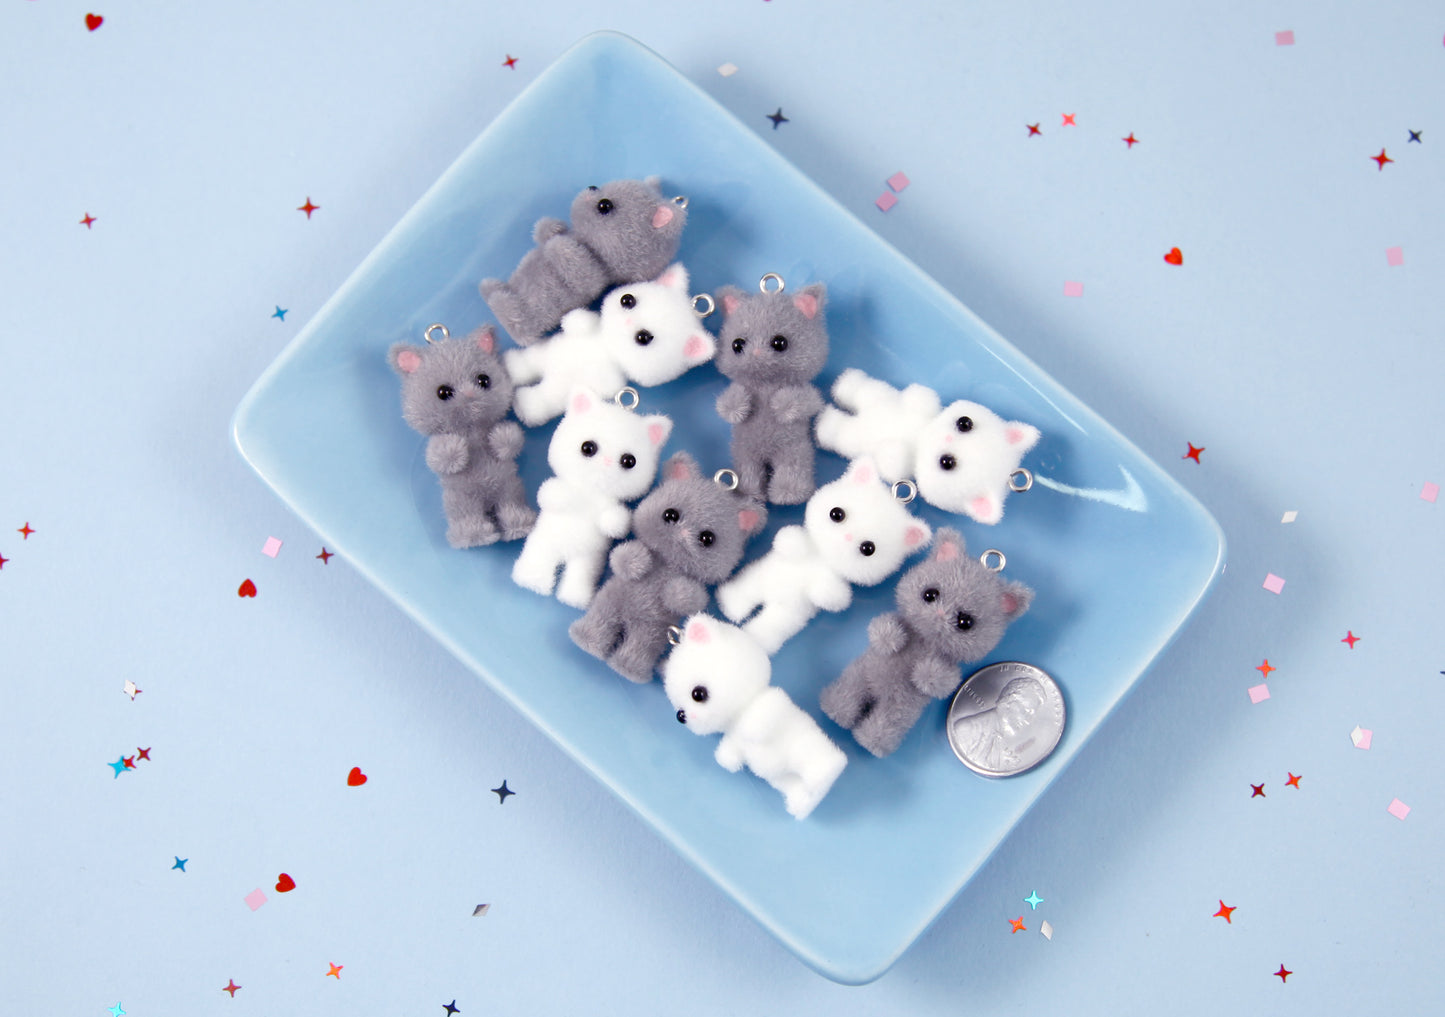 Cute Kitten Charms - 35mm Mini Fuzzy Kitty Cat Pendant Kawaii Acrylic or Plastic Charms - 2 pc set